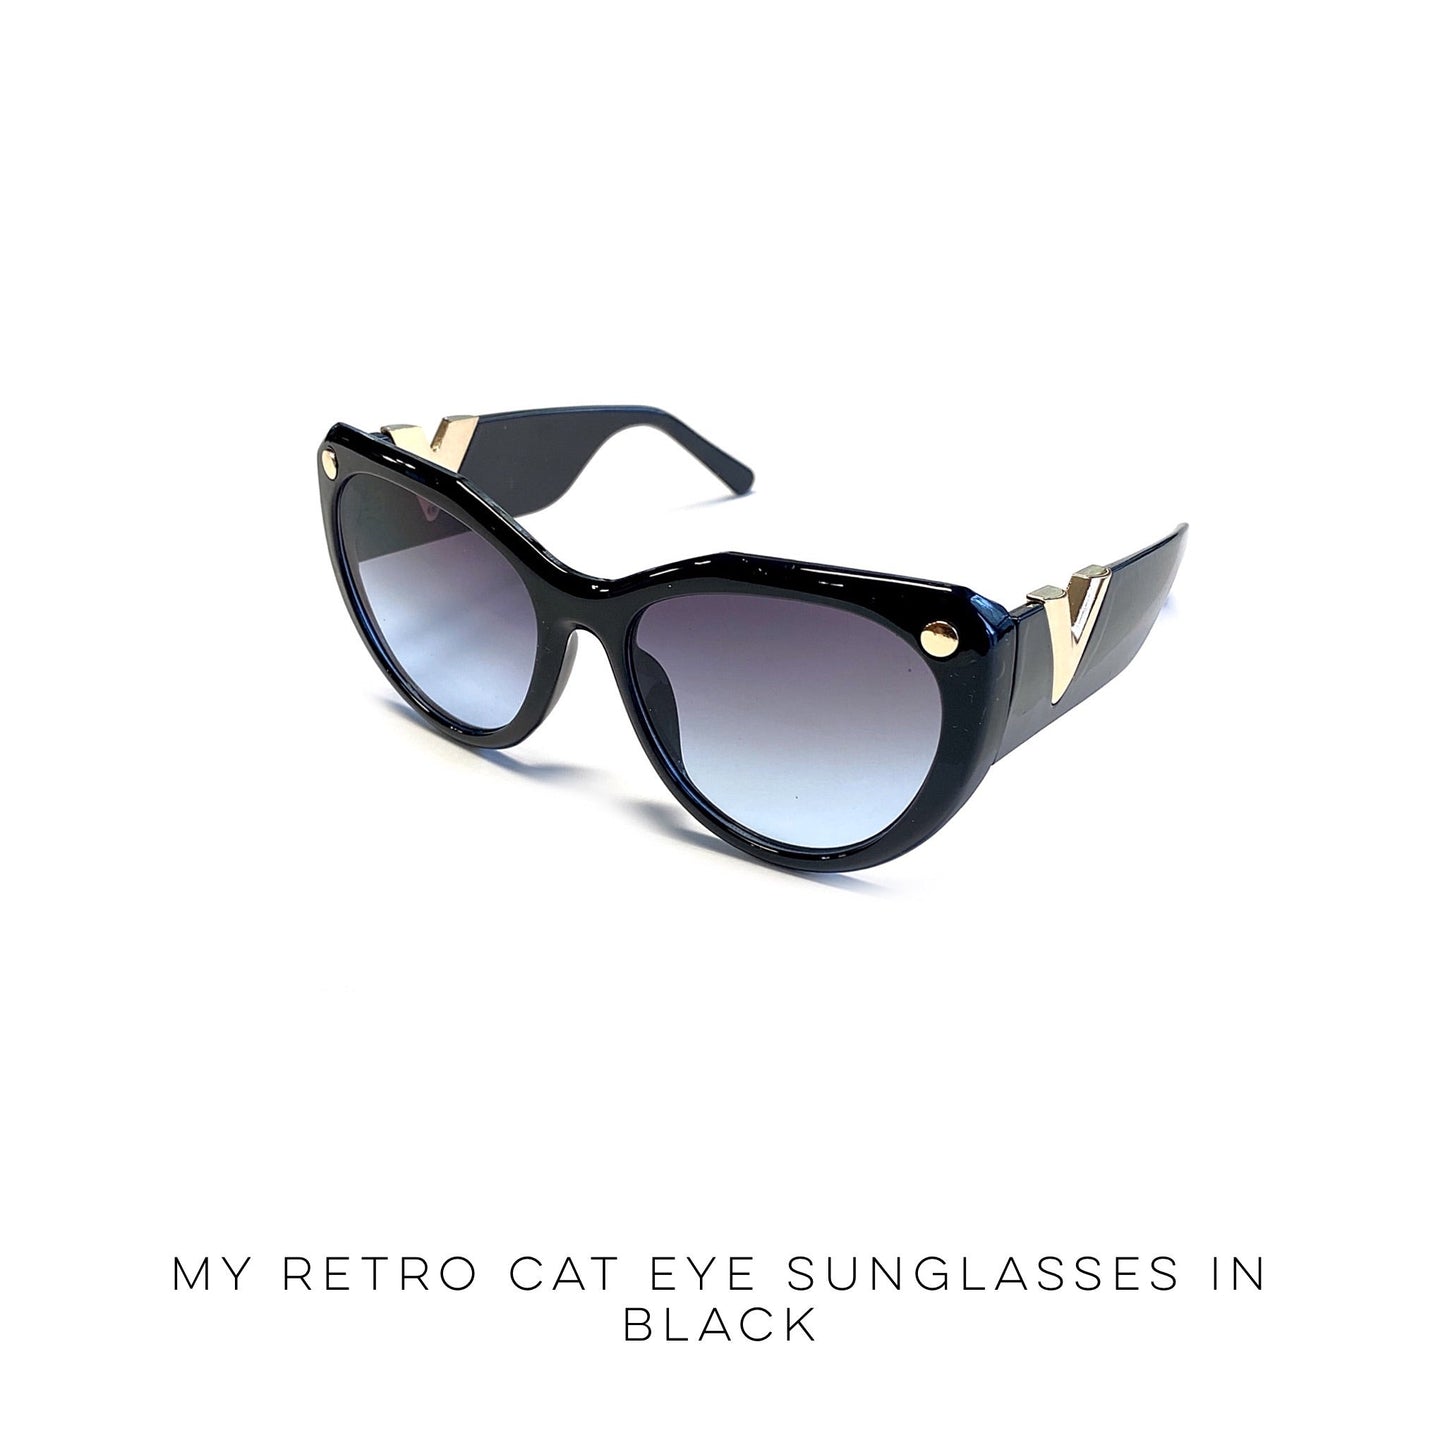 My Retro Cat Eye Sunglasses in Black